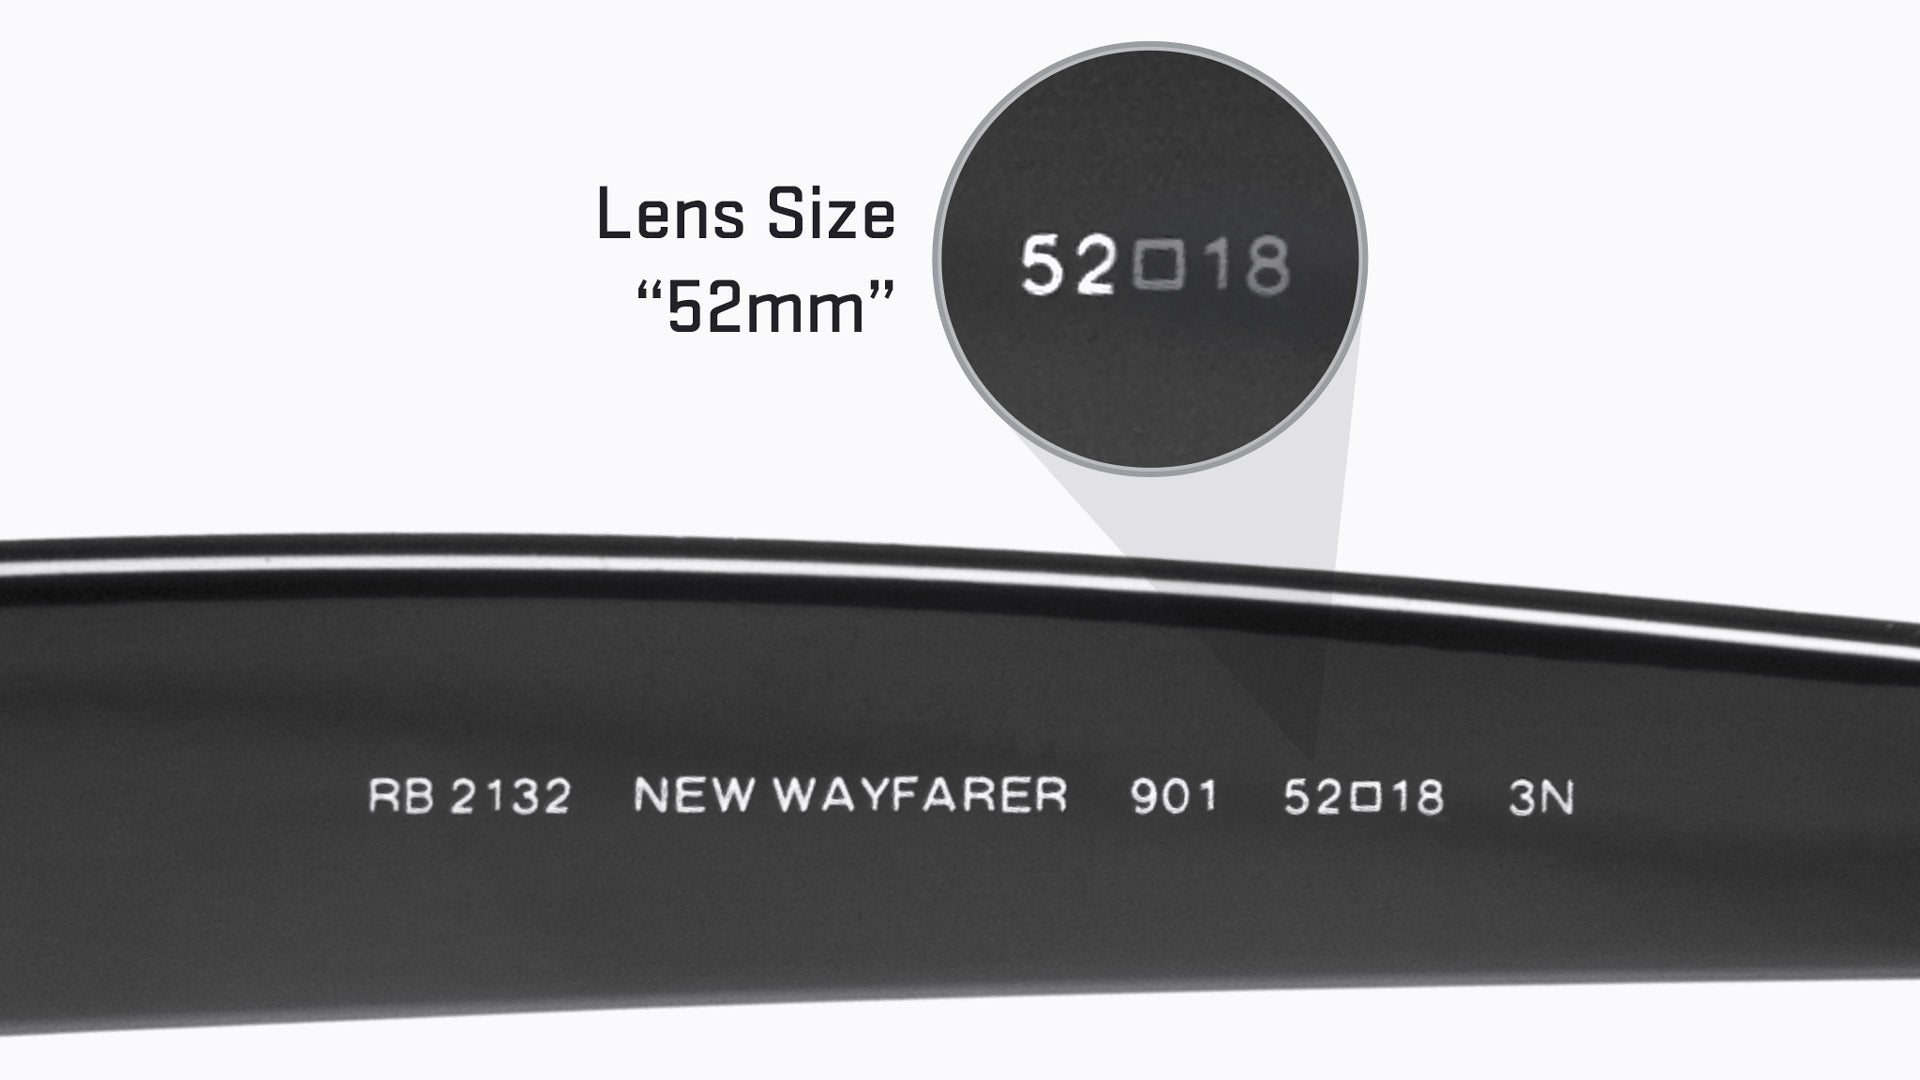 RB 2132 New Wayfarer 901 52 18 3N indicates a Lens Size of 52mm